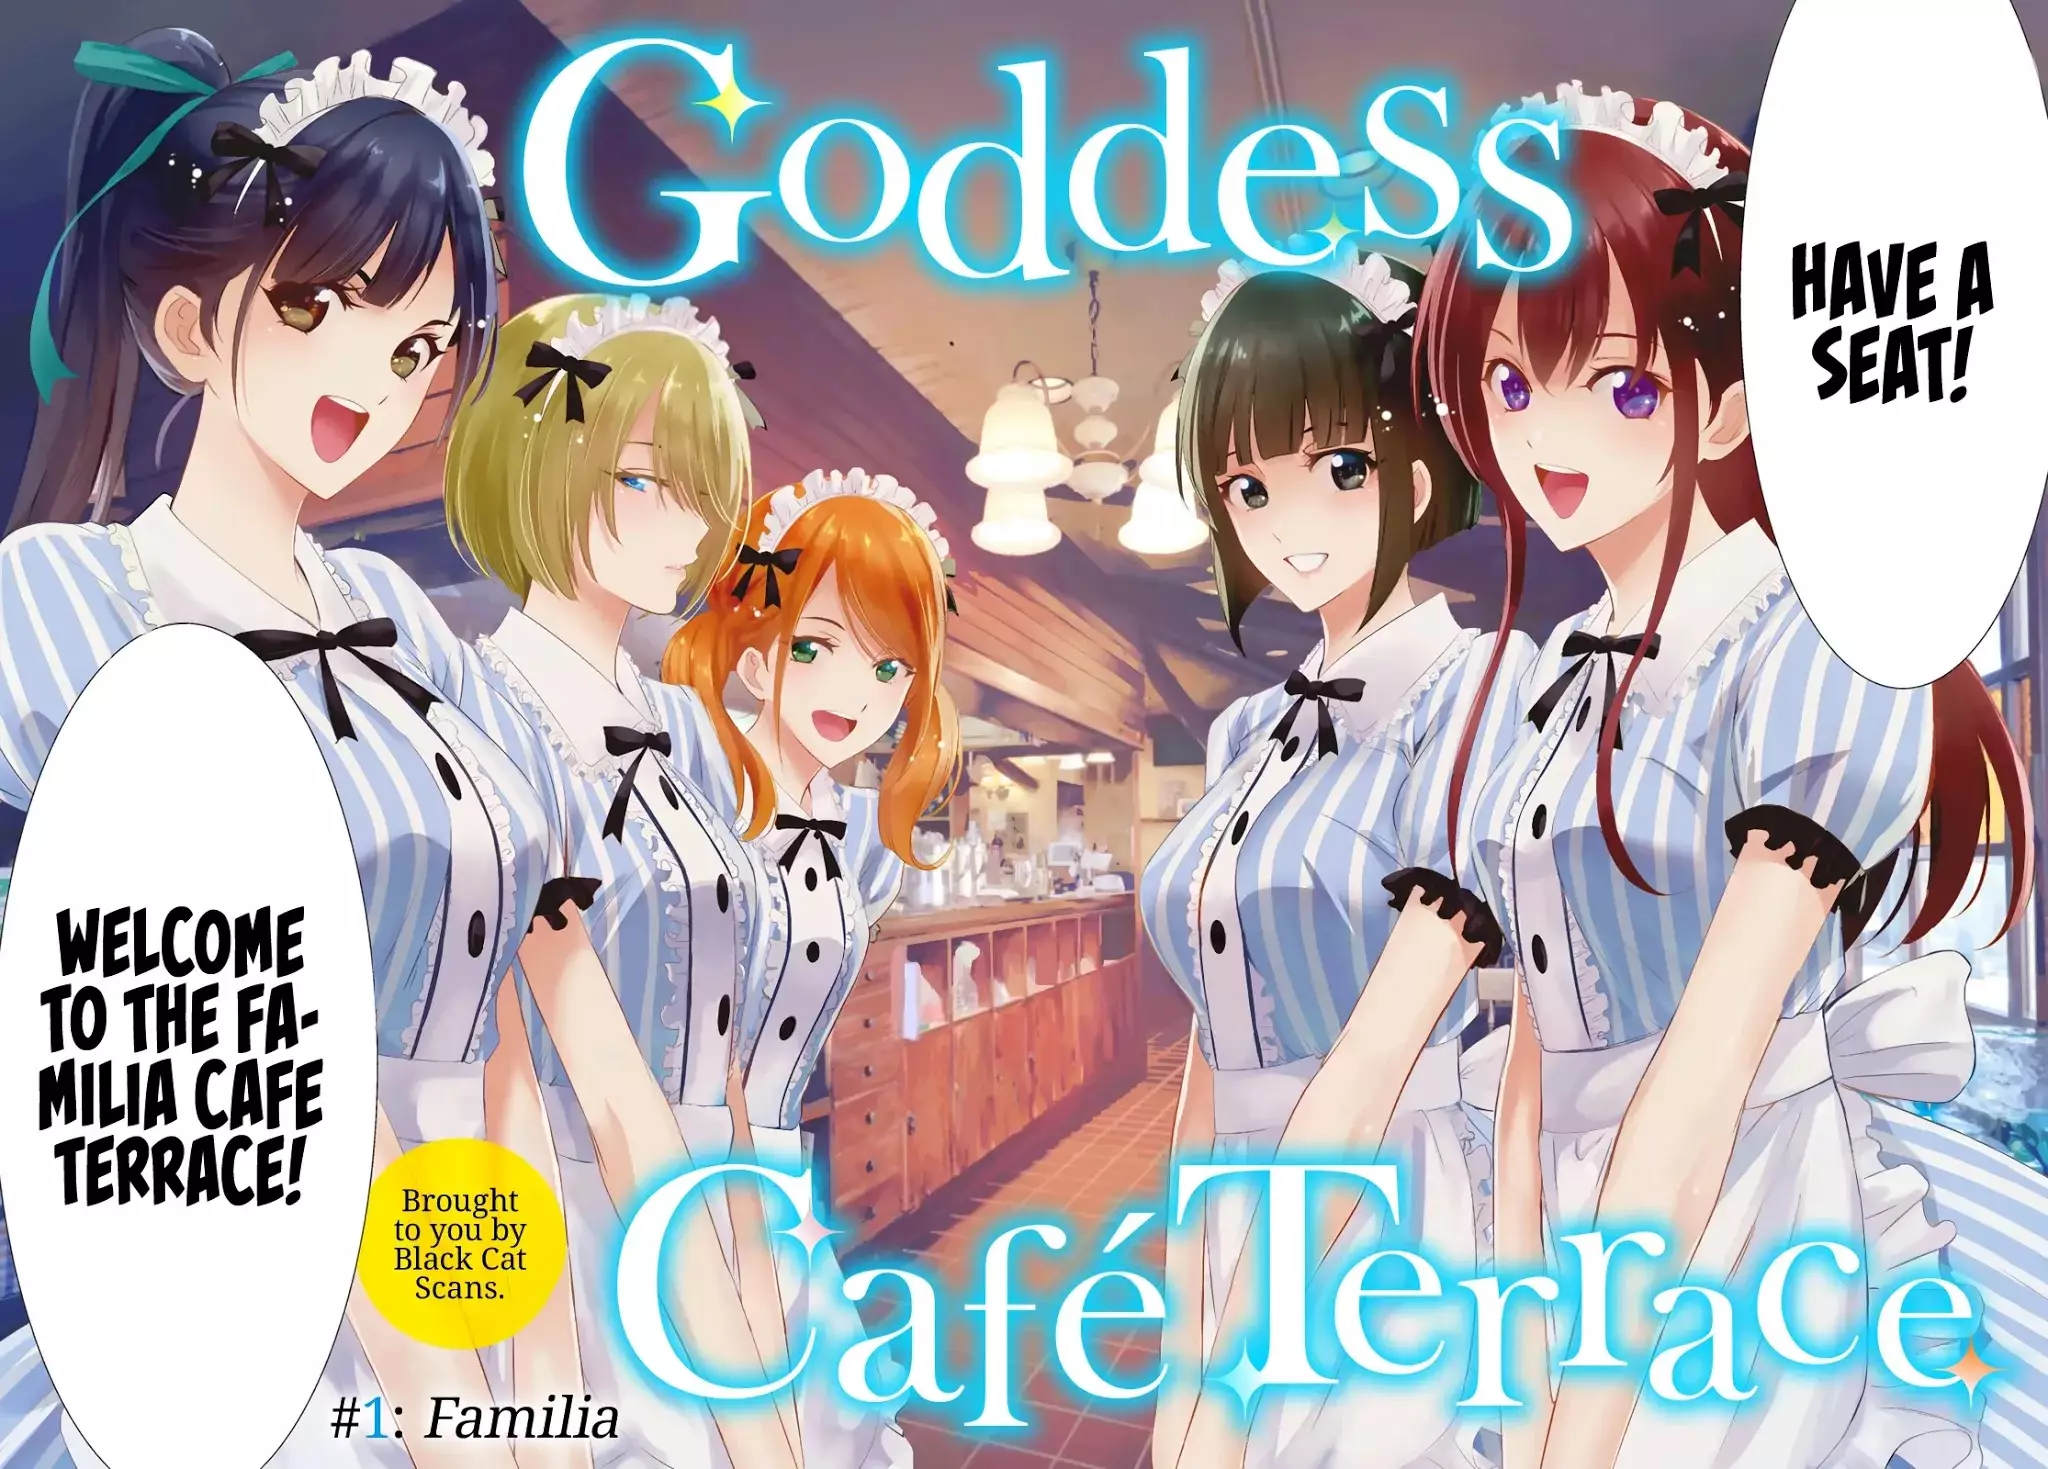 Goddess Cafe Terrace, Chapter 81 - Goddess Cafe Terrace Manga Online